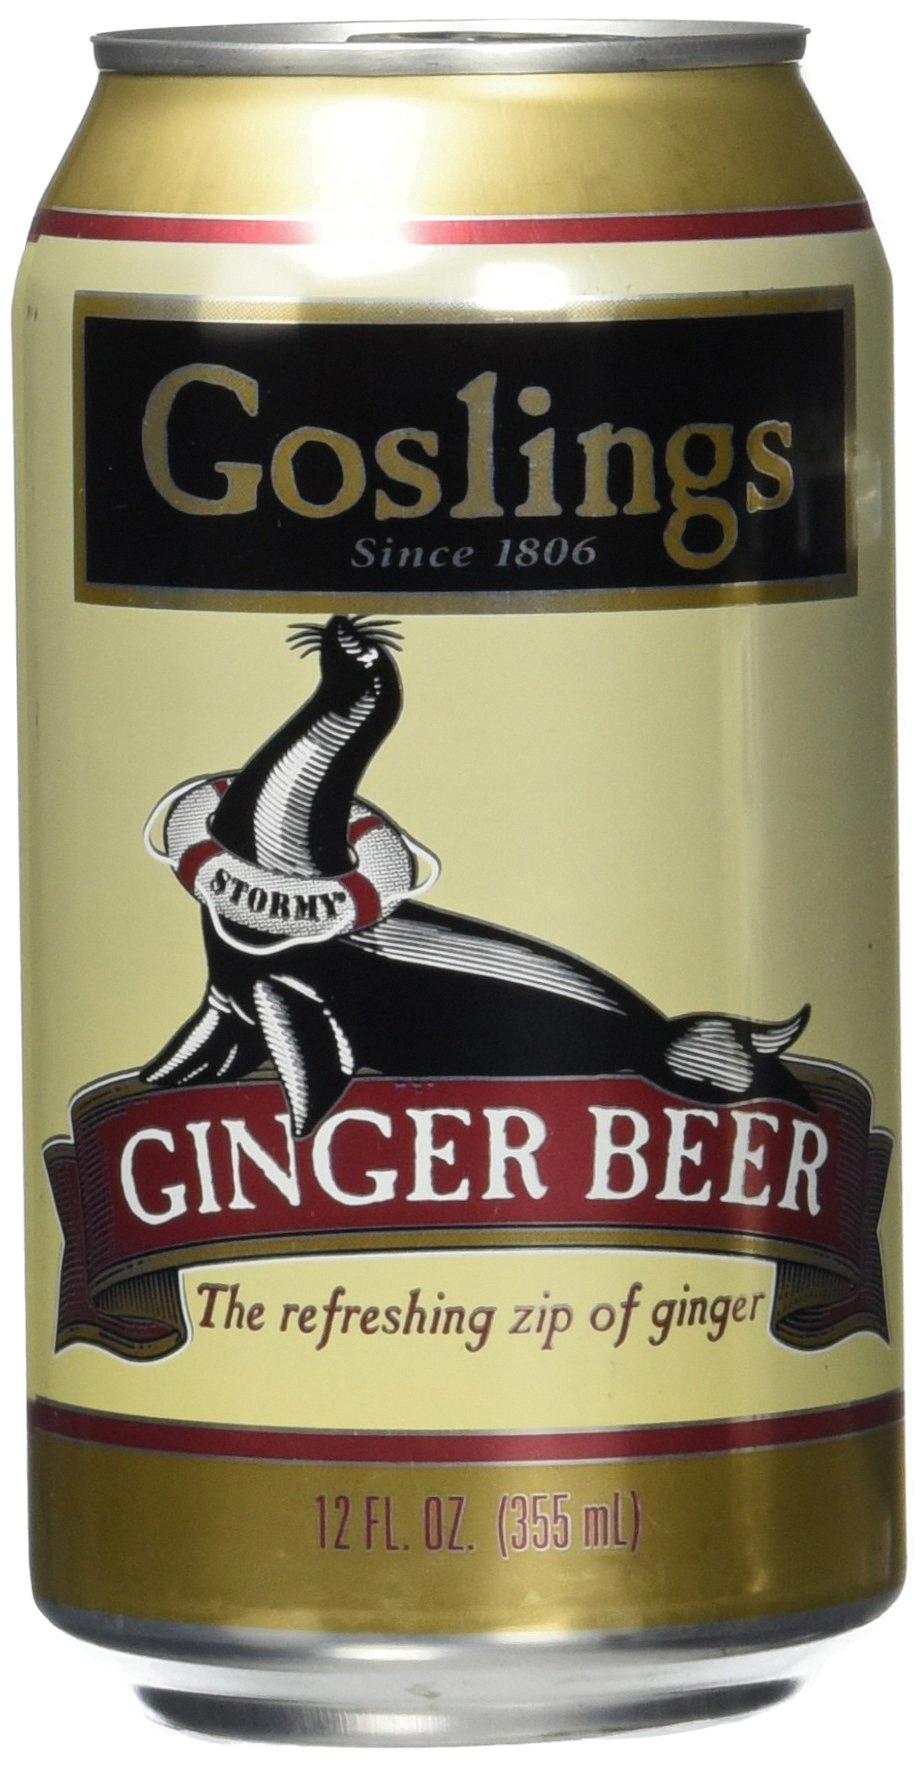 goslings ginger beer nutrition facts 4